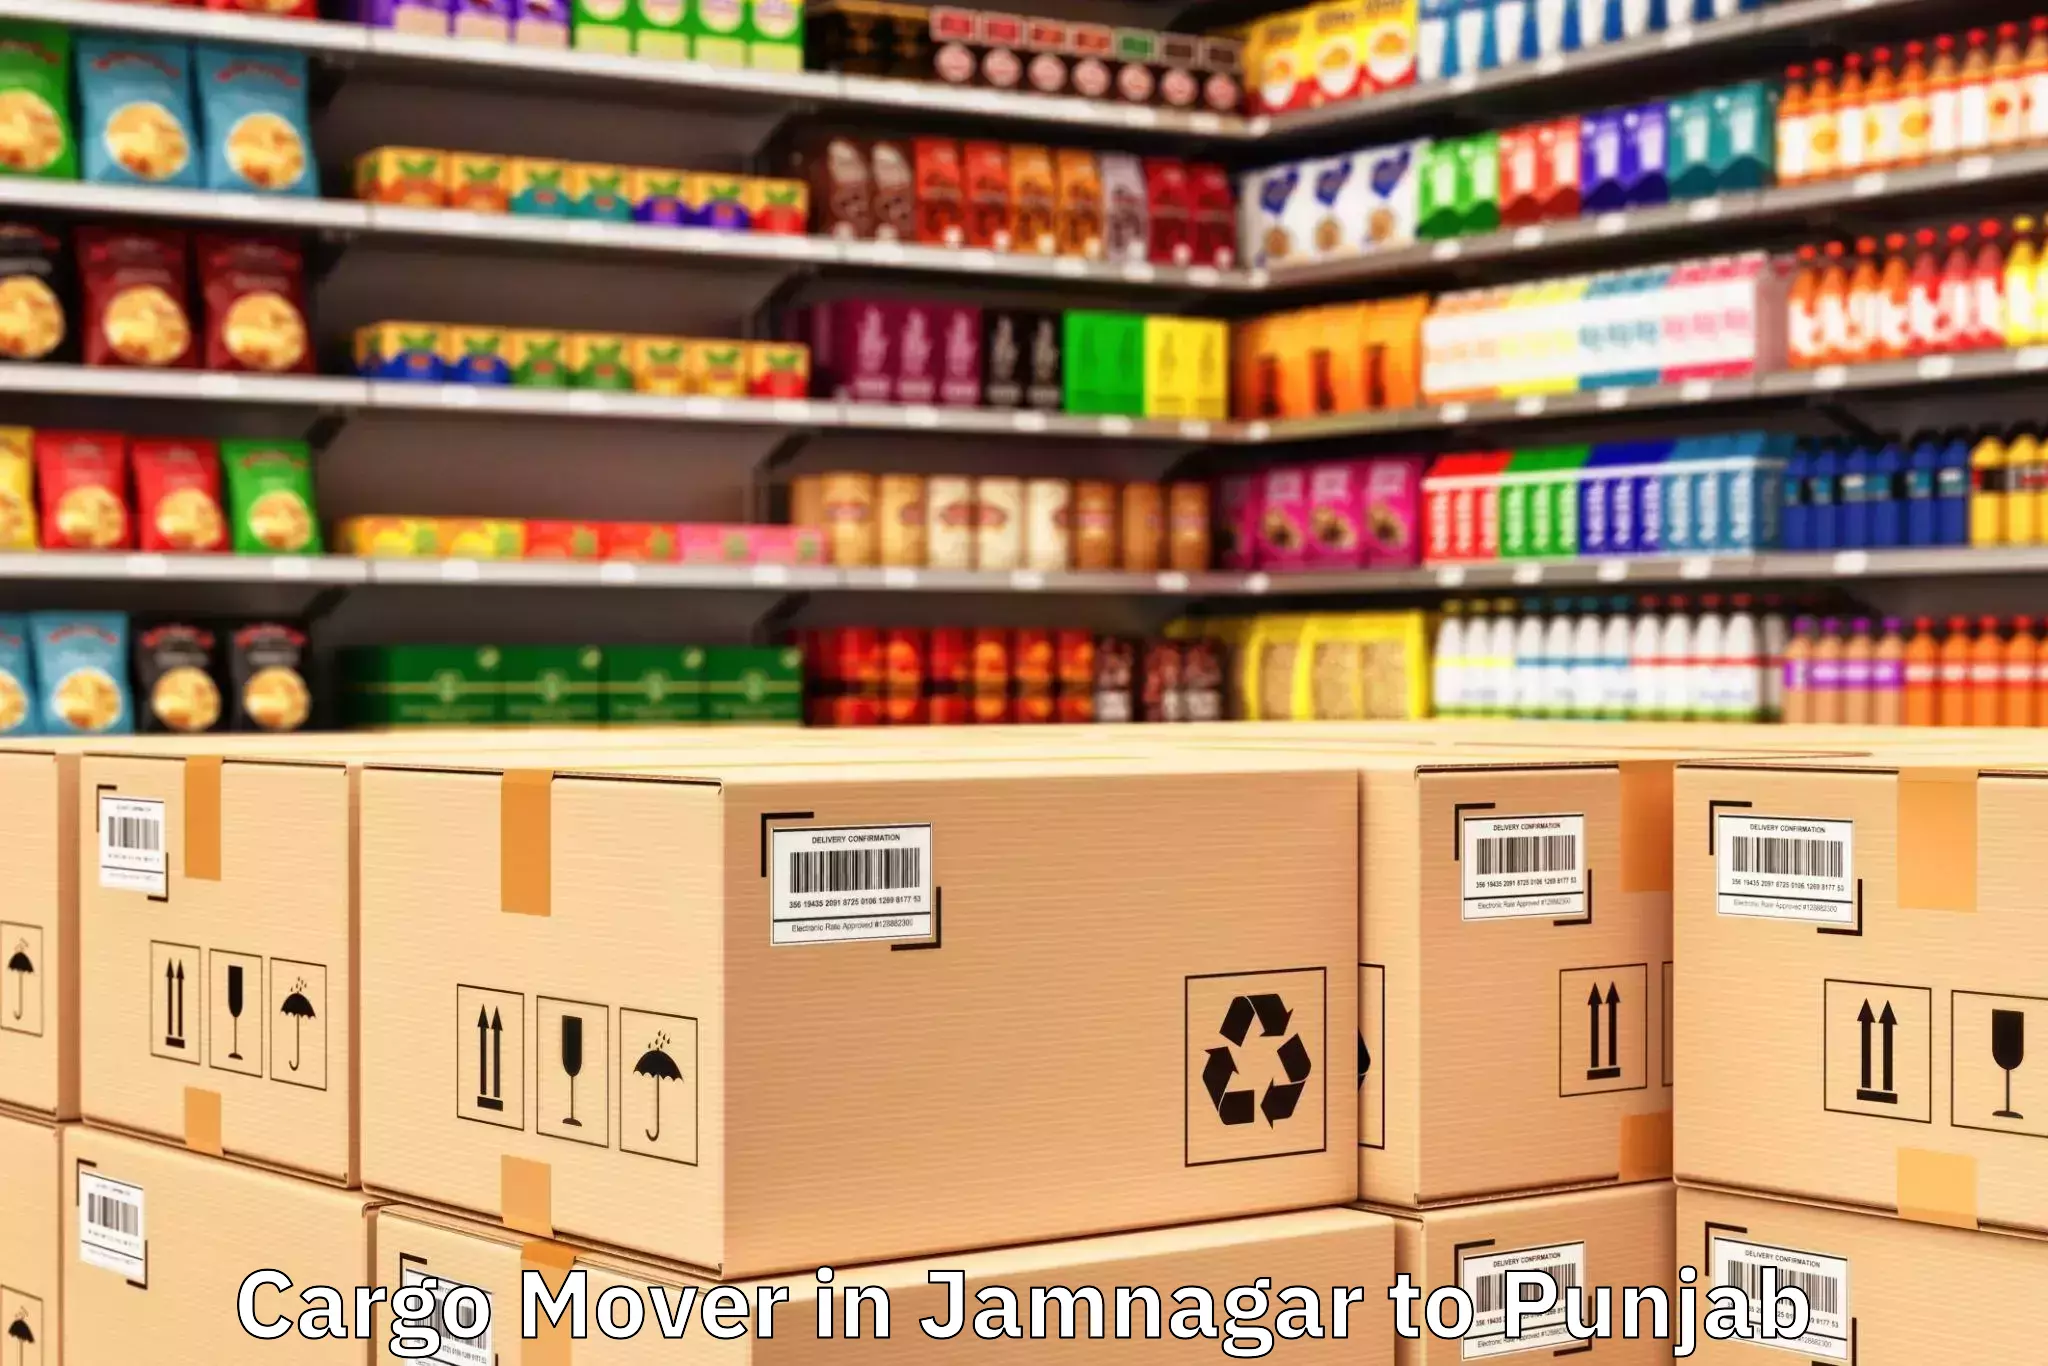 Quality Jamnagar to Soul Space Spirit Mall Cargo Mover